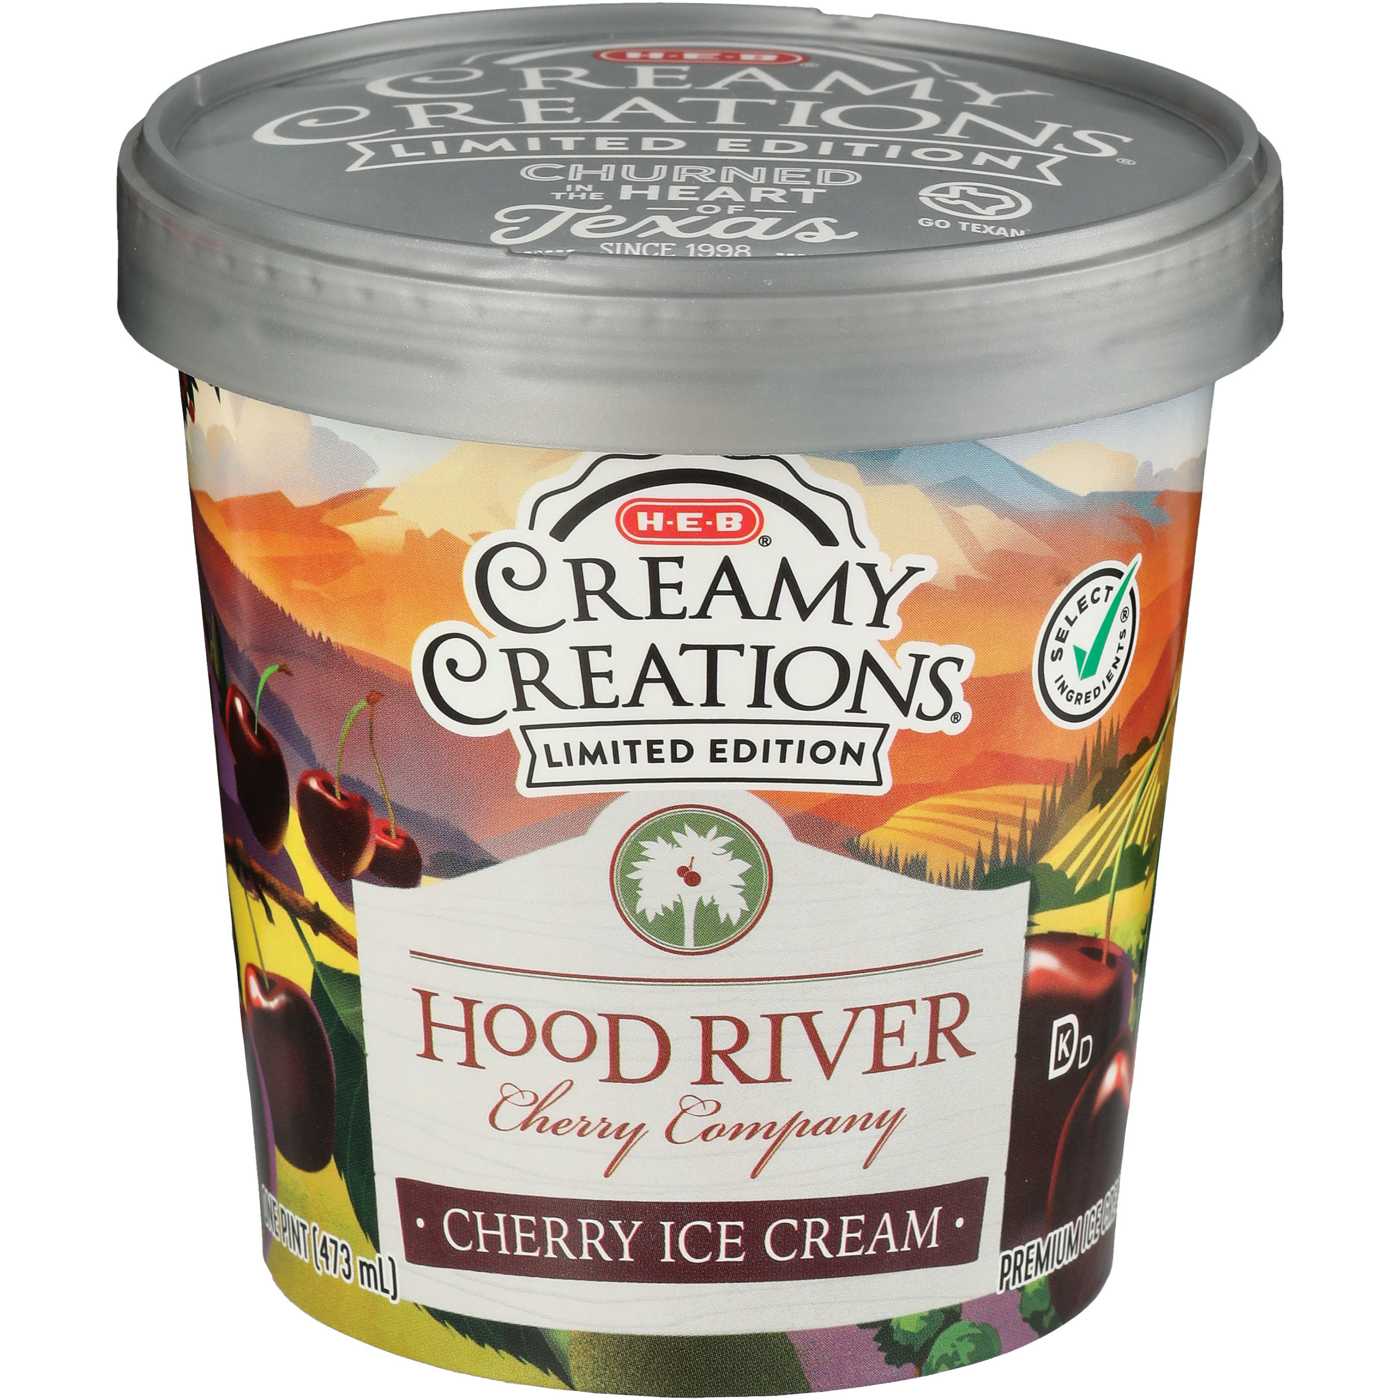 H-E-B Creamy Creations Hood River Cherry Company Cherry Ice Cream; image 1 of 2